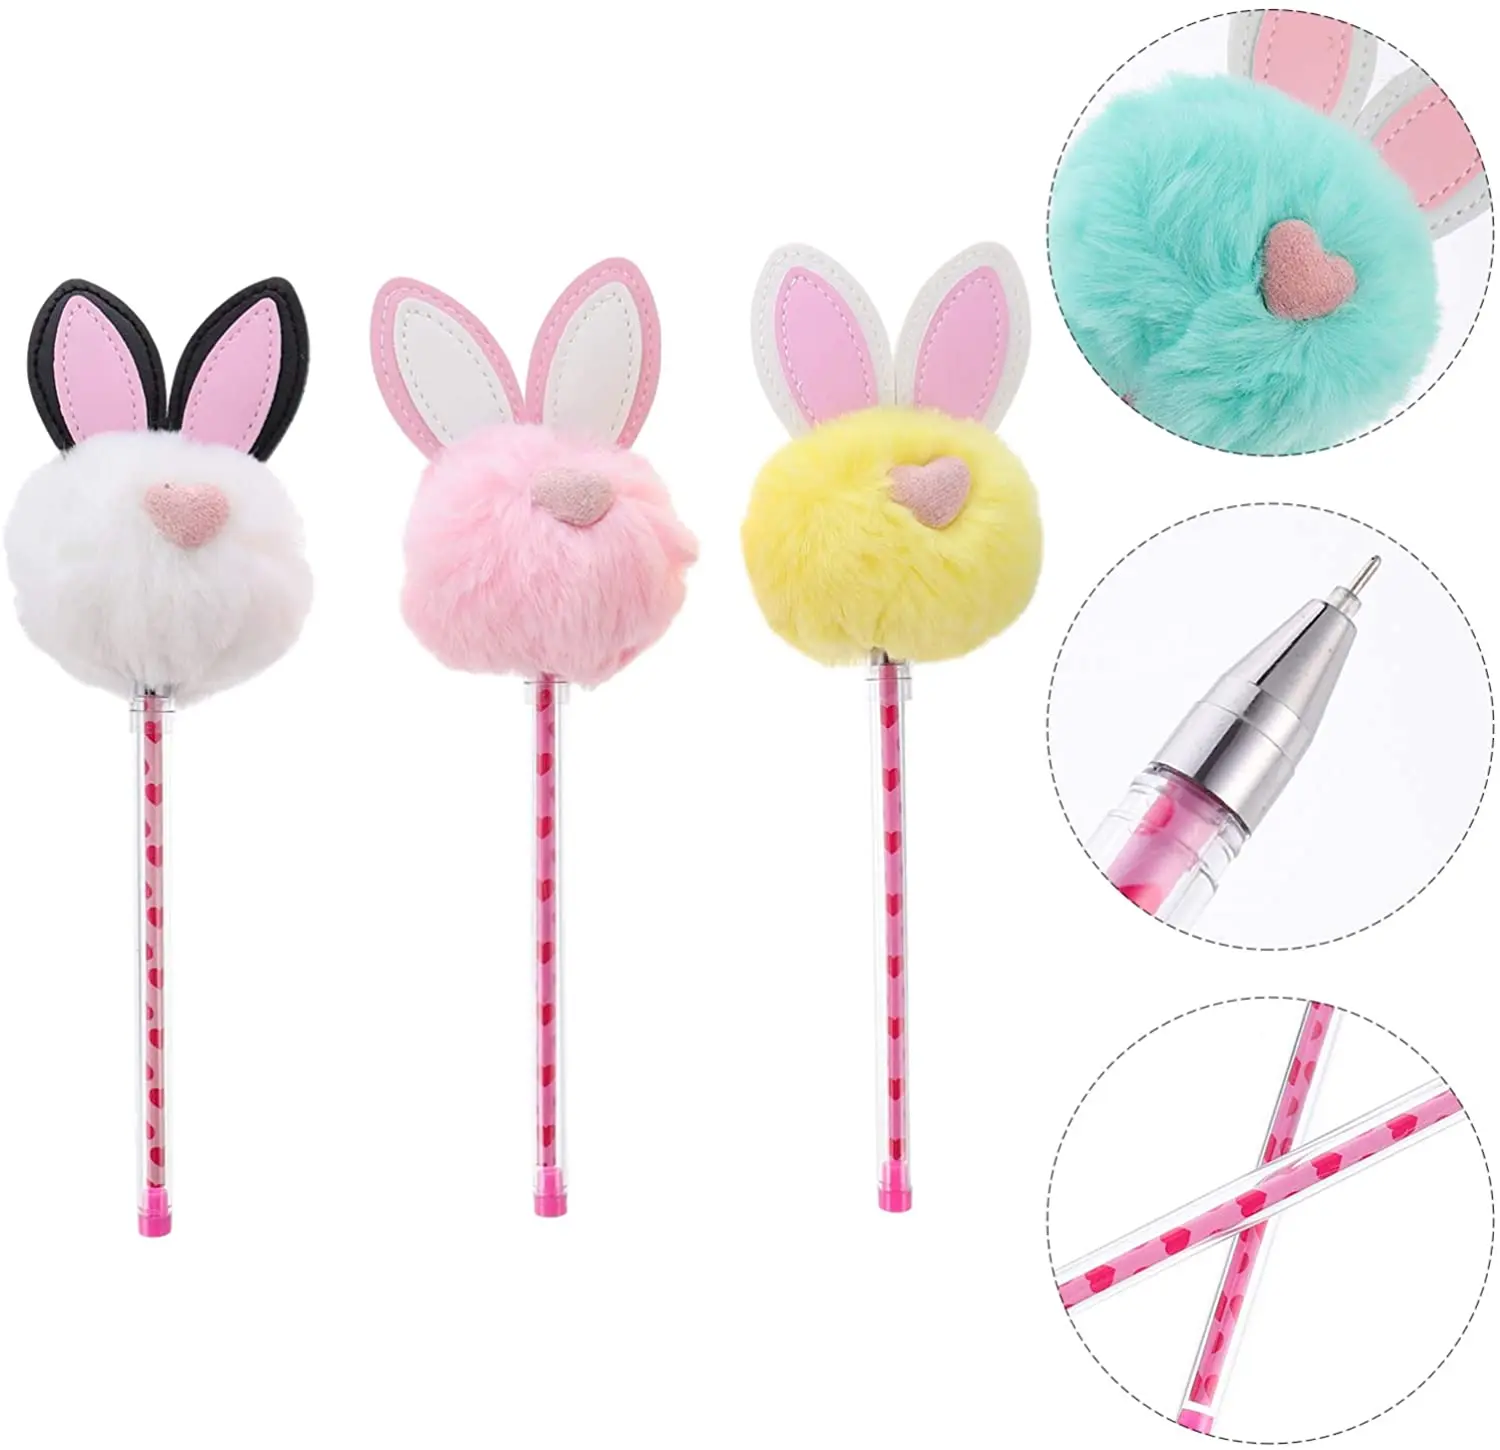  24 Pcs Pom Pom Bunny Pen Cute Fluffy Easter Pens